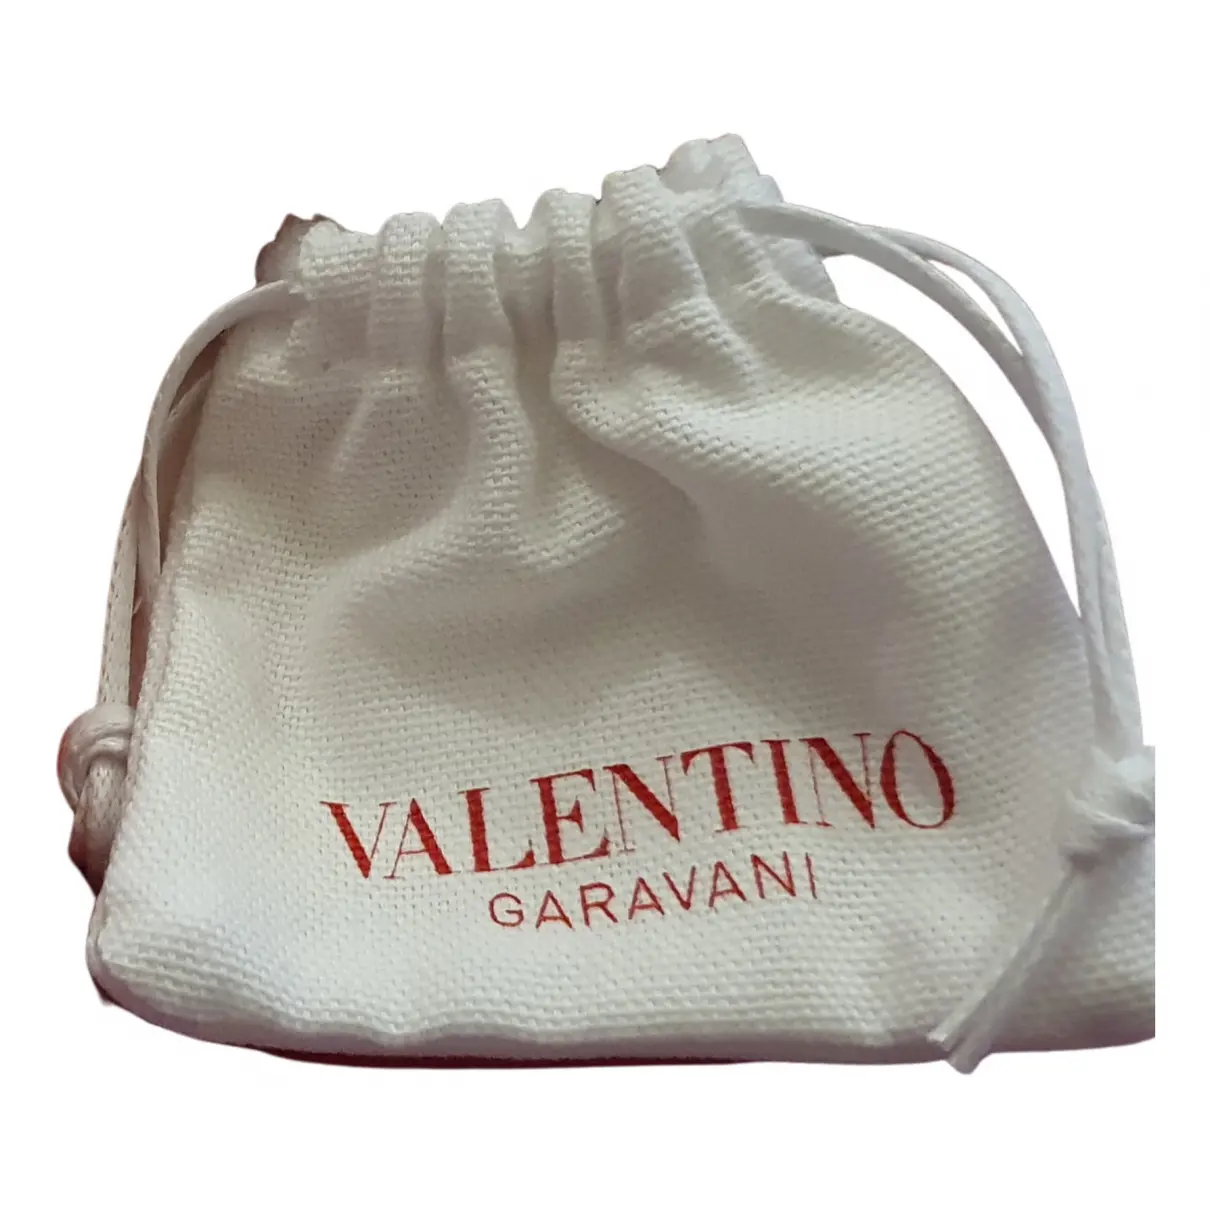 Buy Valentino Garavani Earrings online